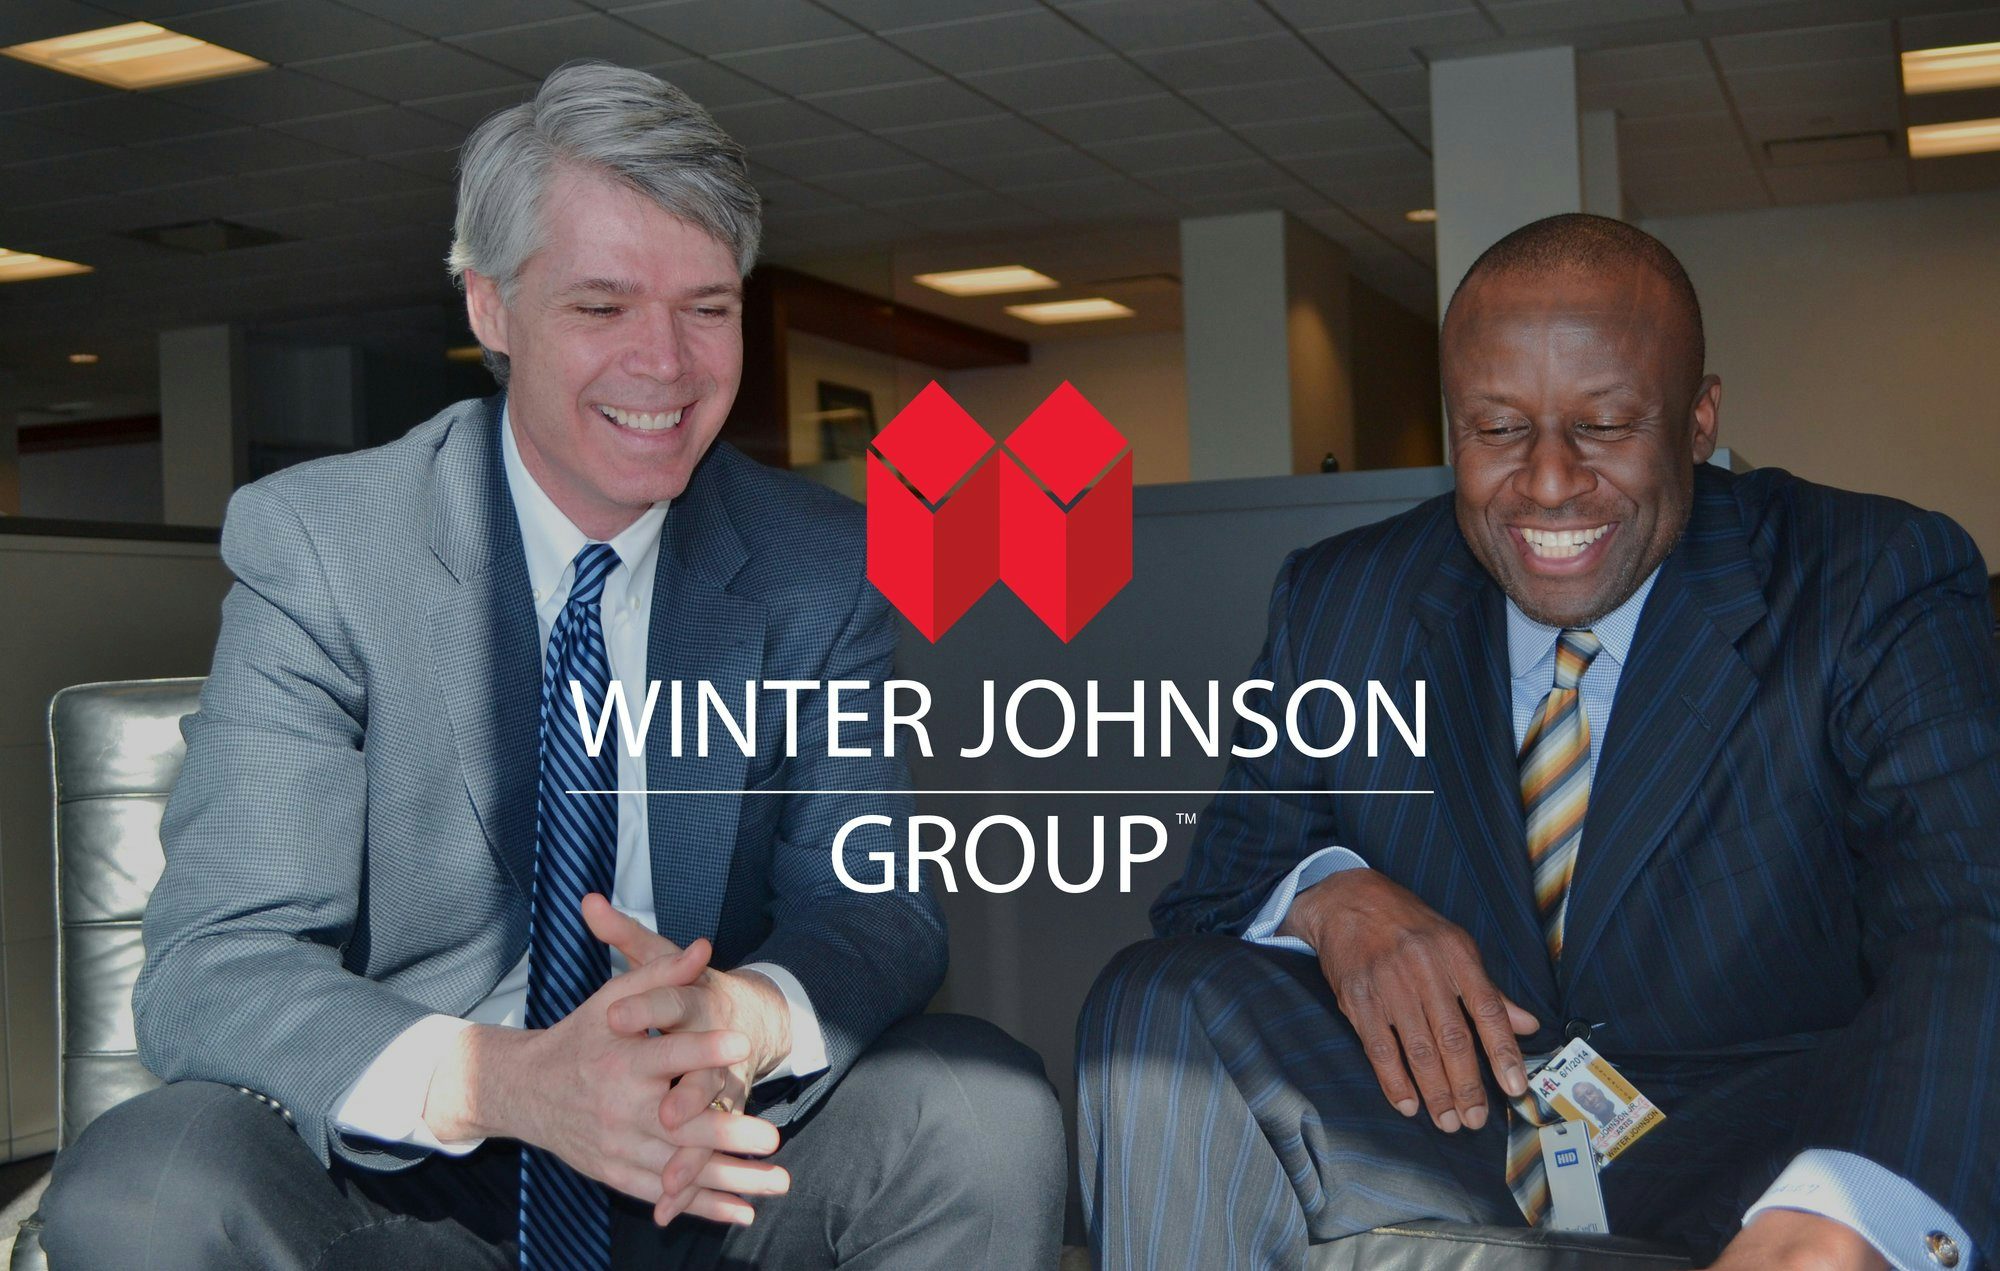 Winter Johnson Group